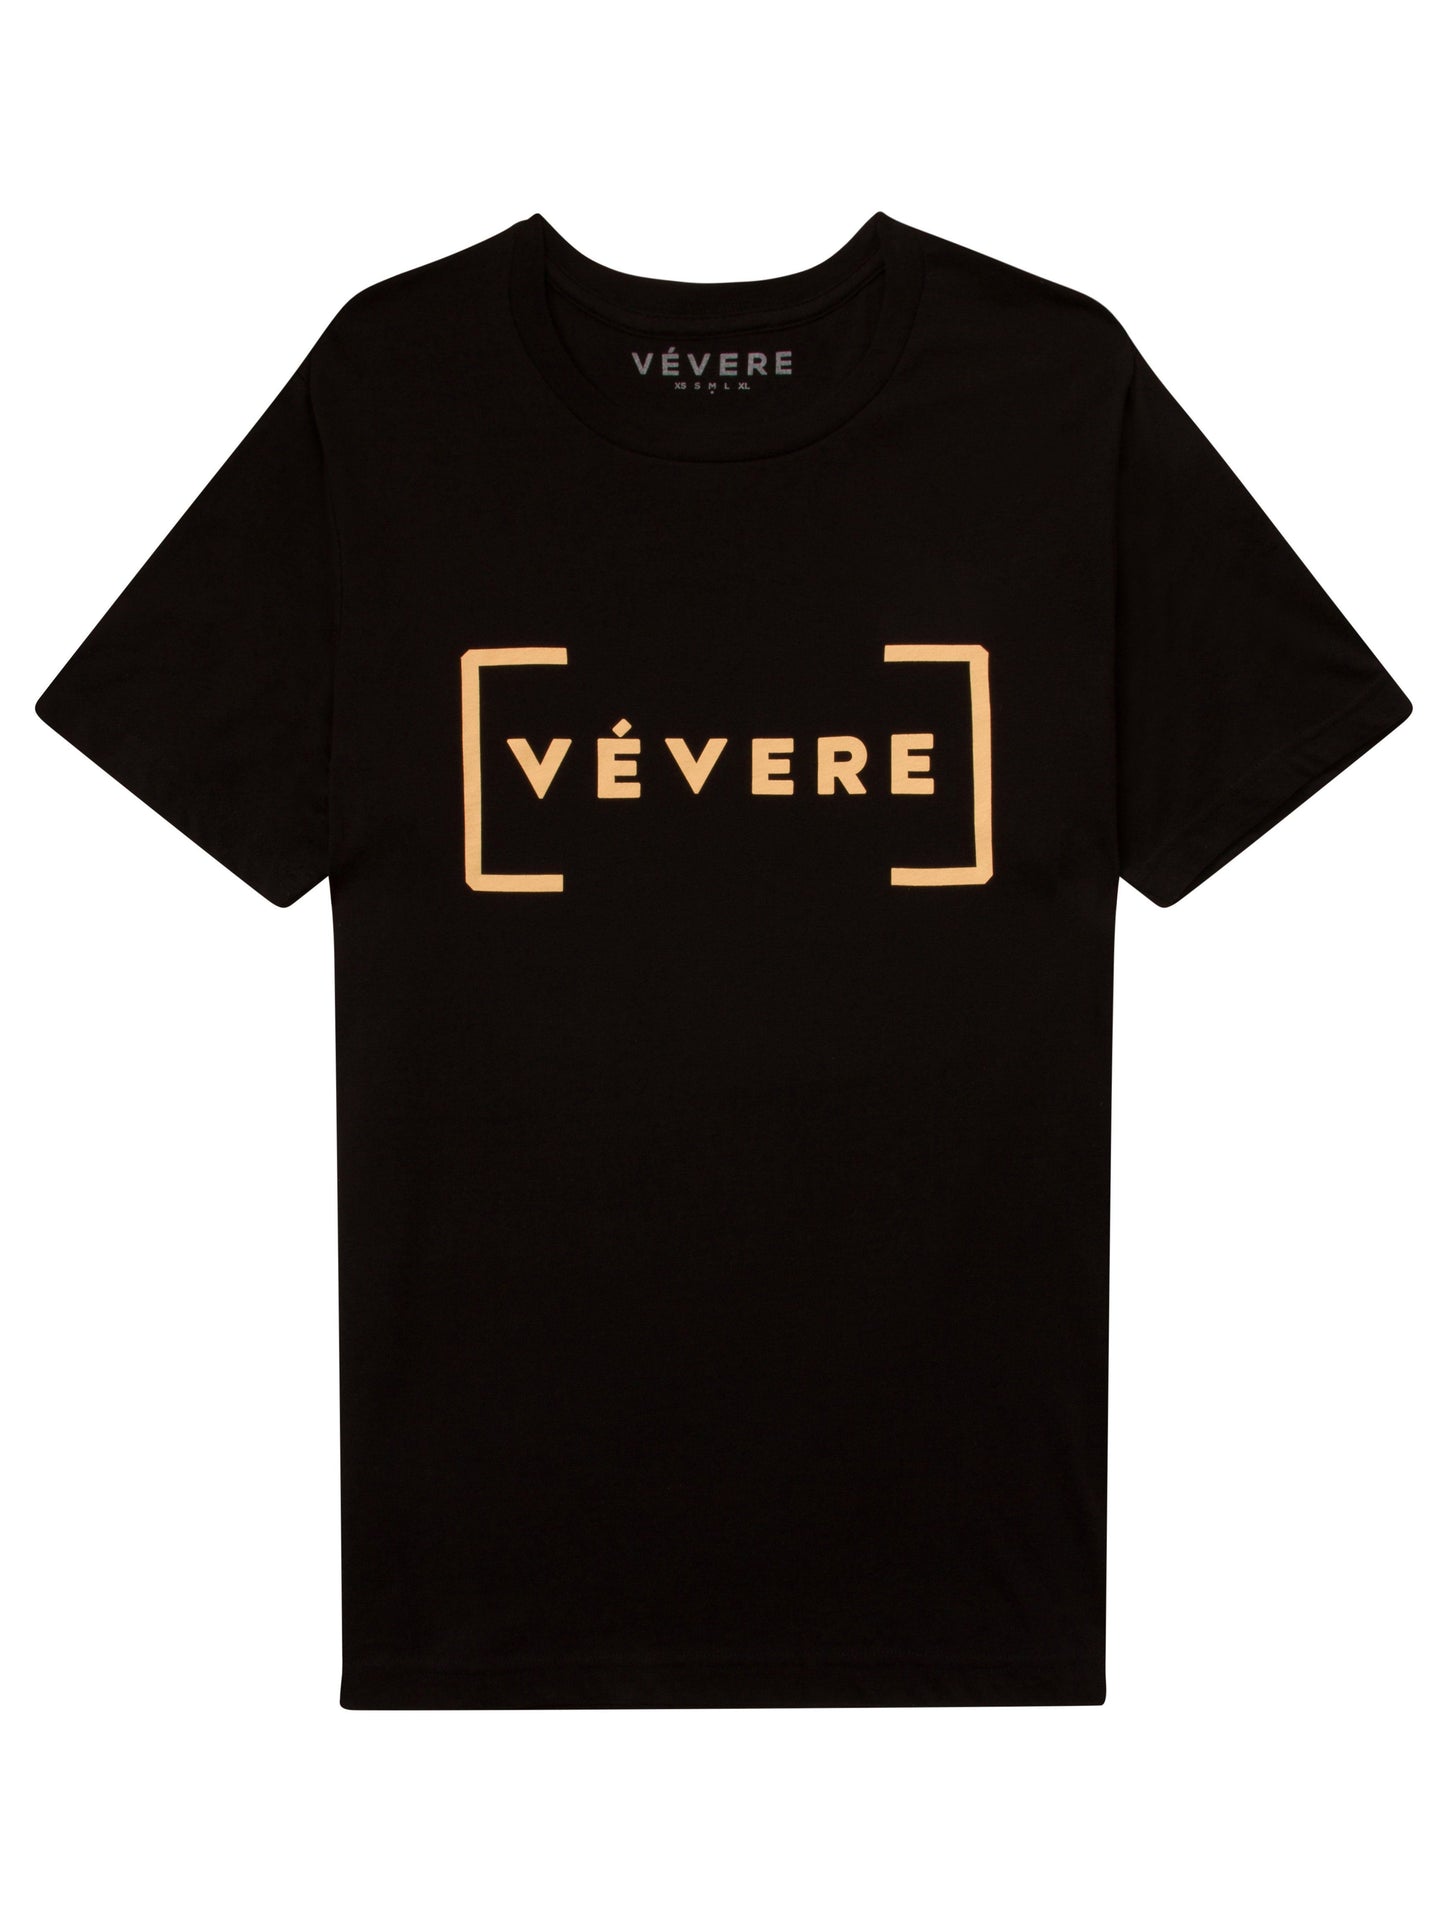 Nero Peach T-Shirt front 4 - Vevere